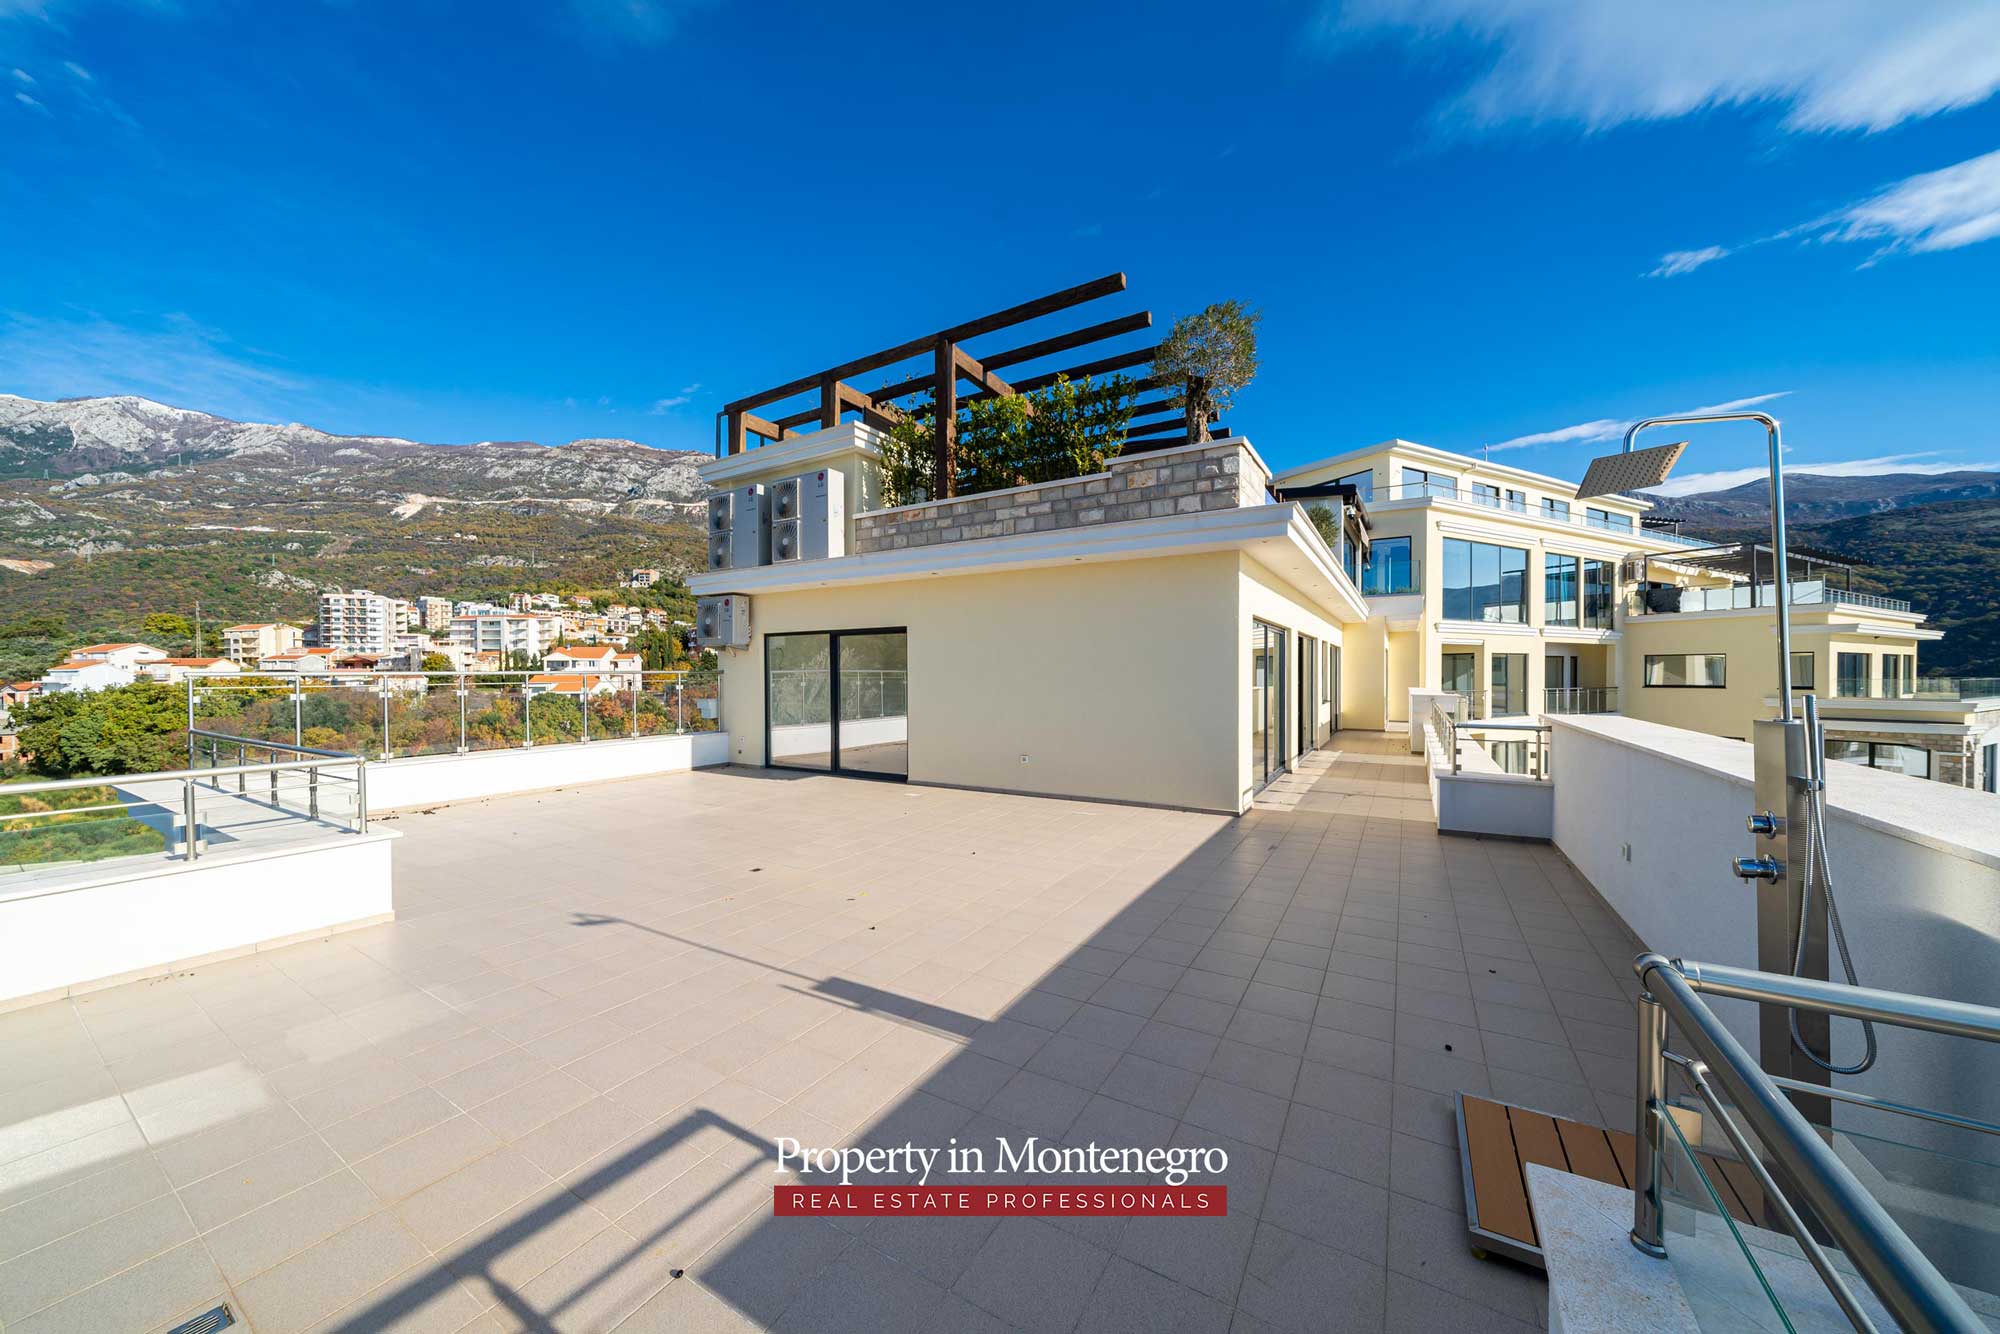 Penthouse for sale in Budva Riviera